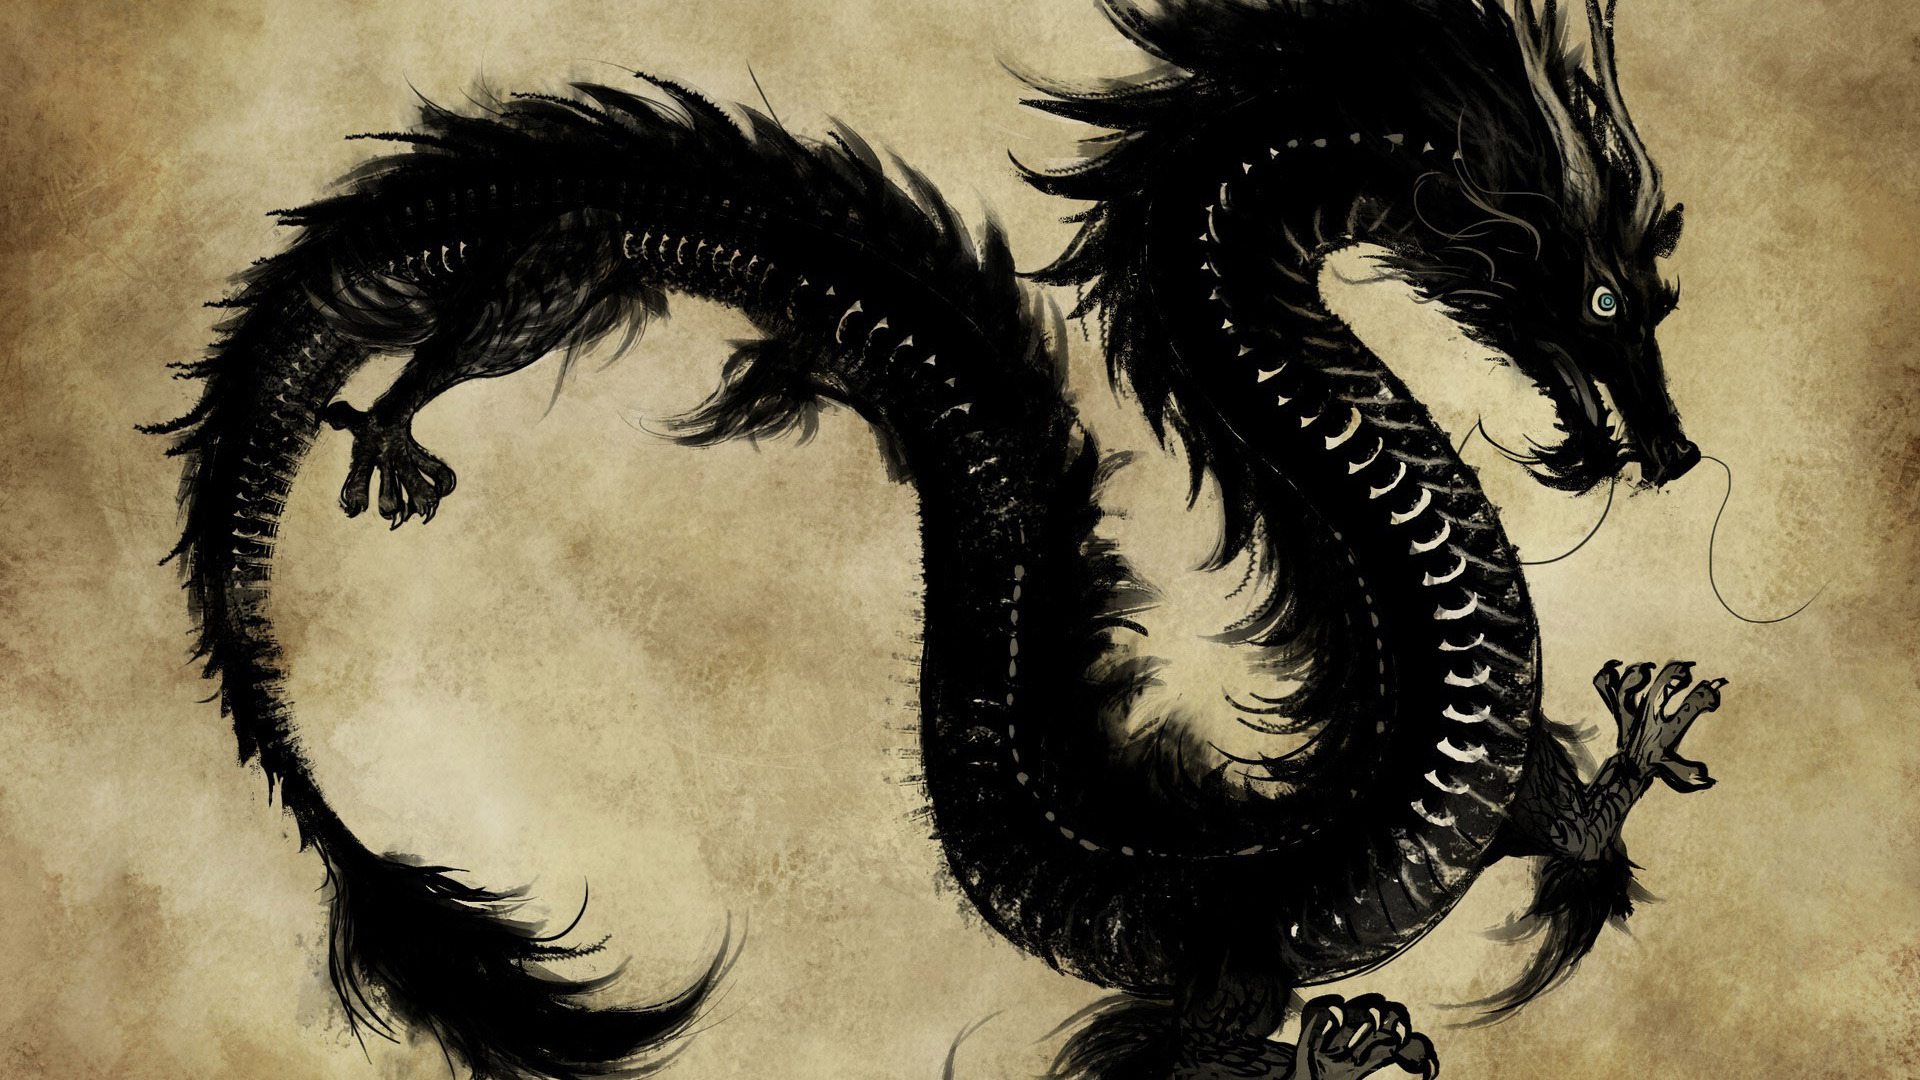 Black Dragon Wallpaper for iPhone 5 by RenegadeDeadpoo on DeviantArt